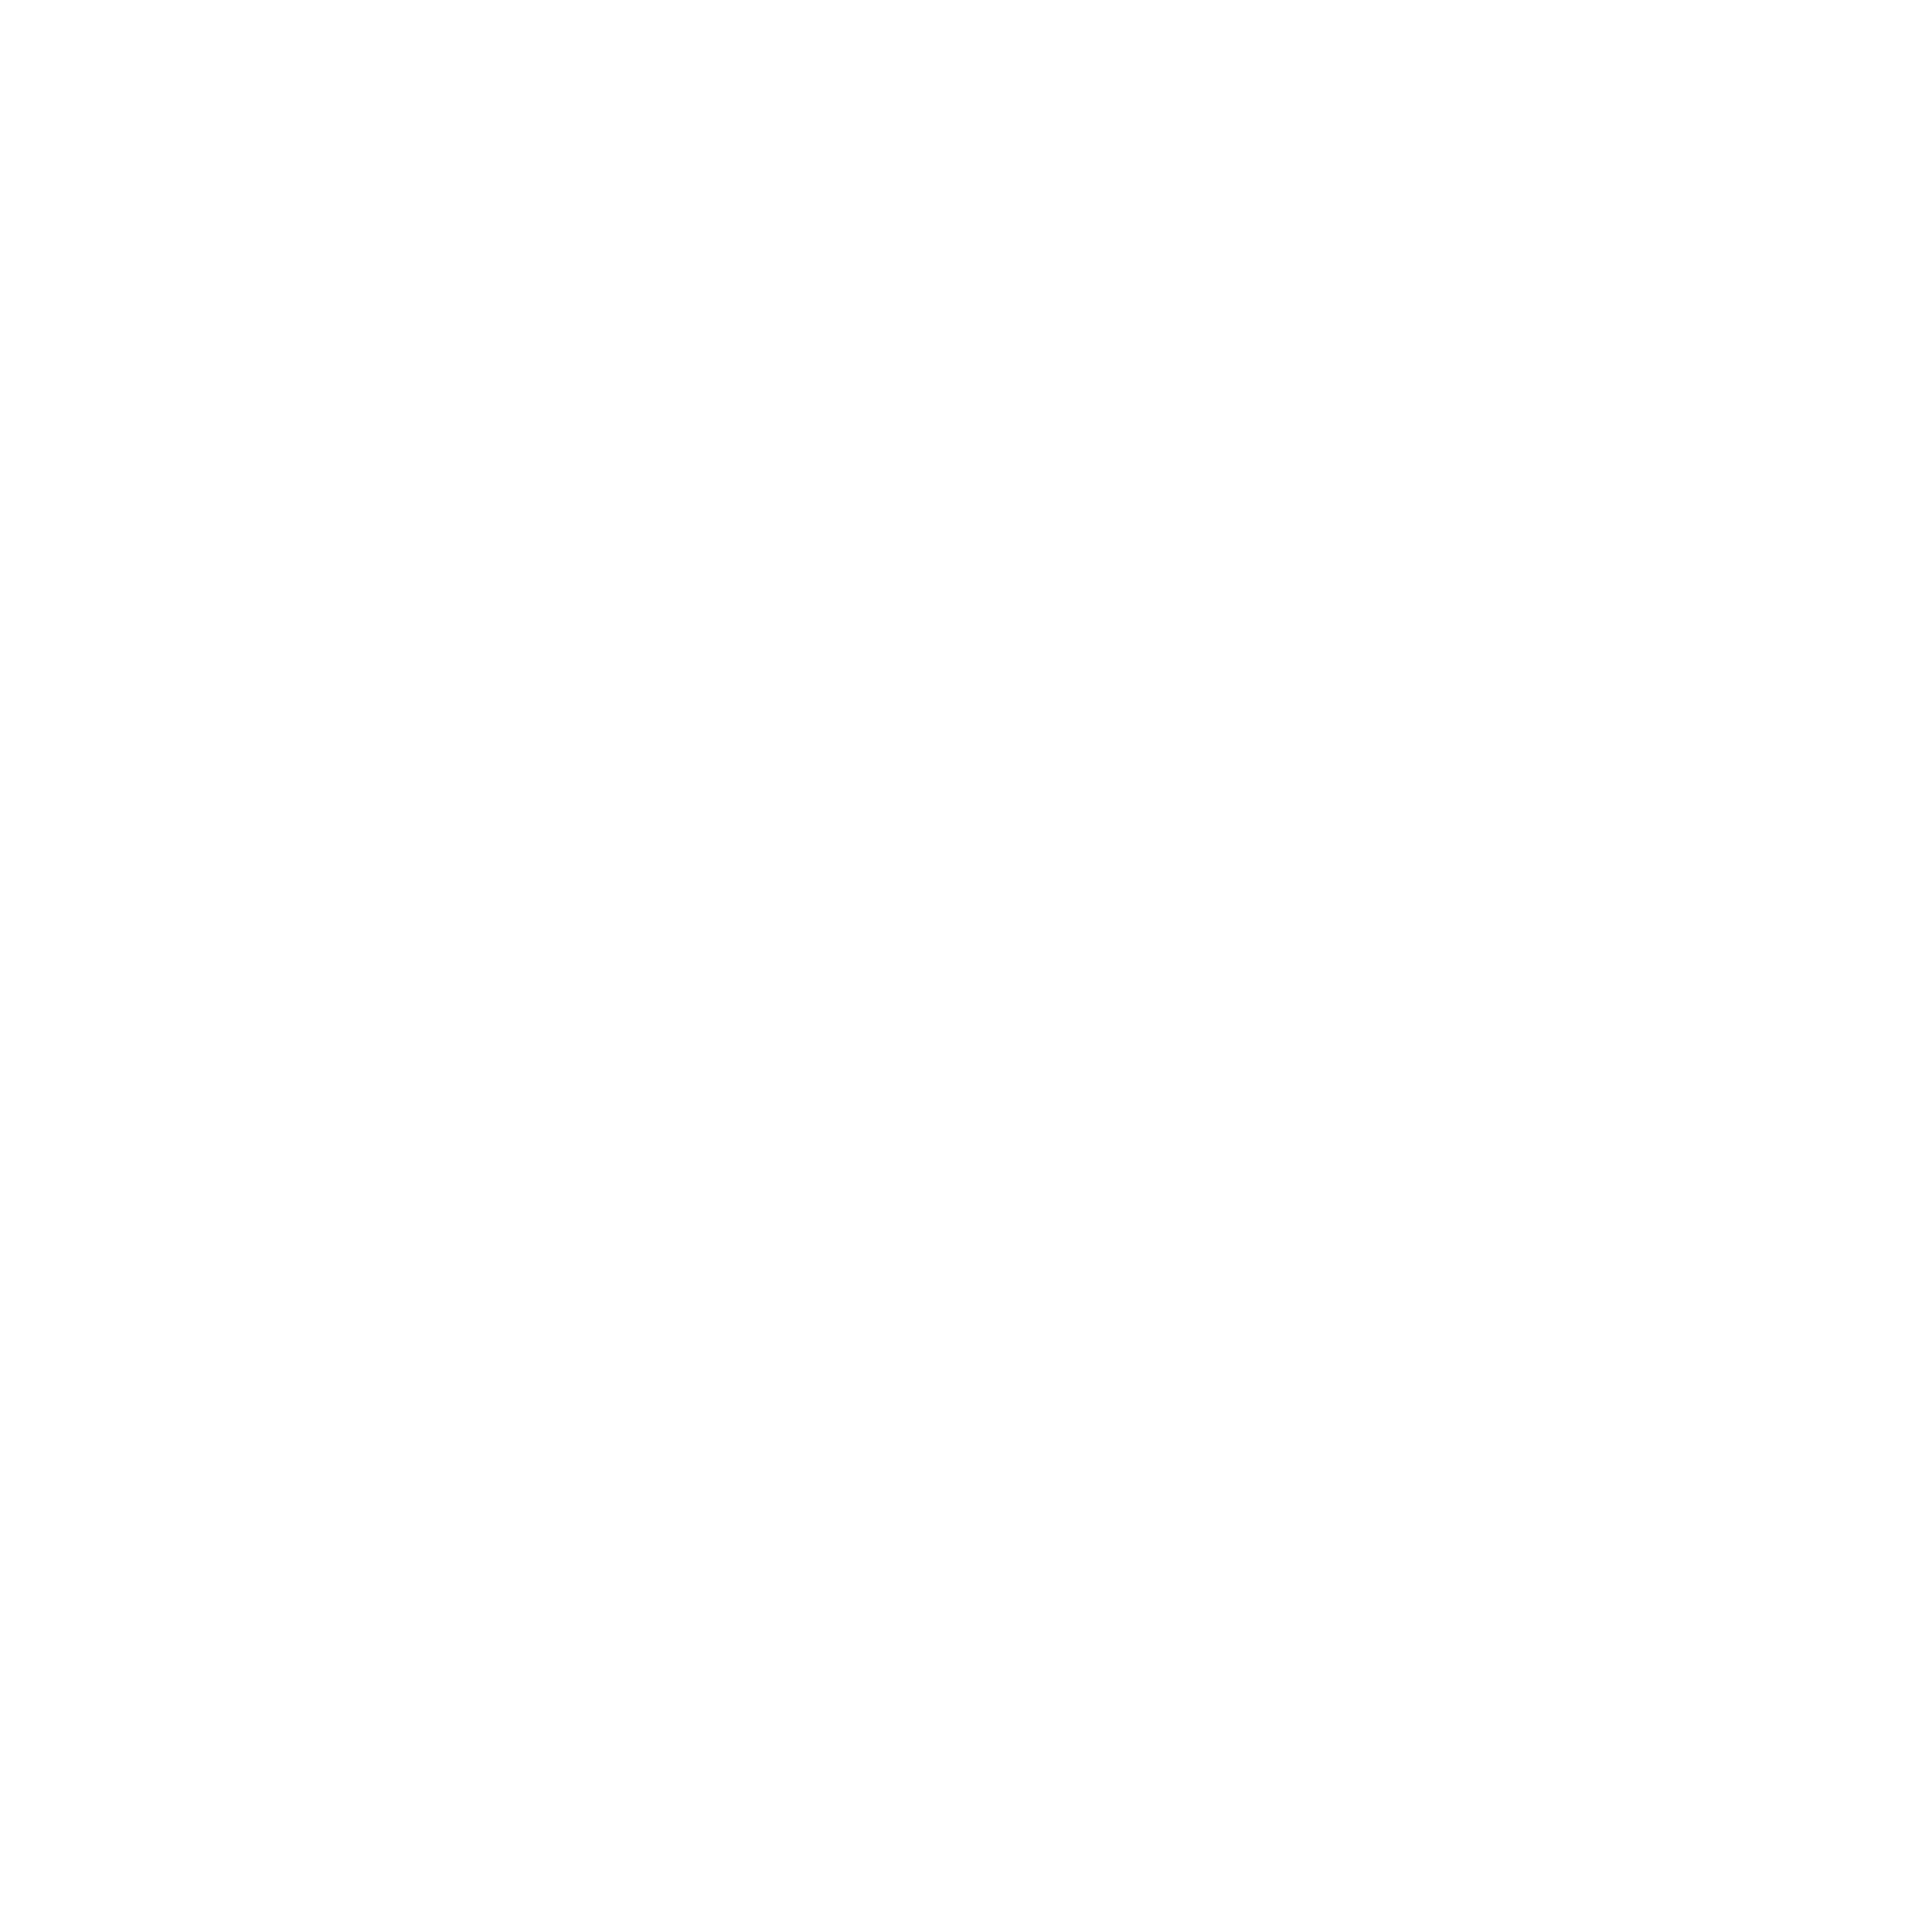 Baseball 365